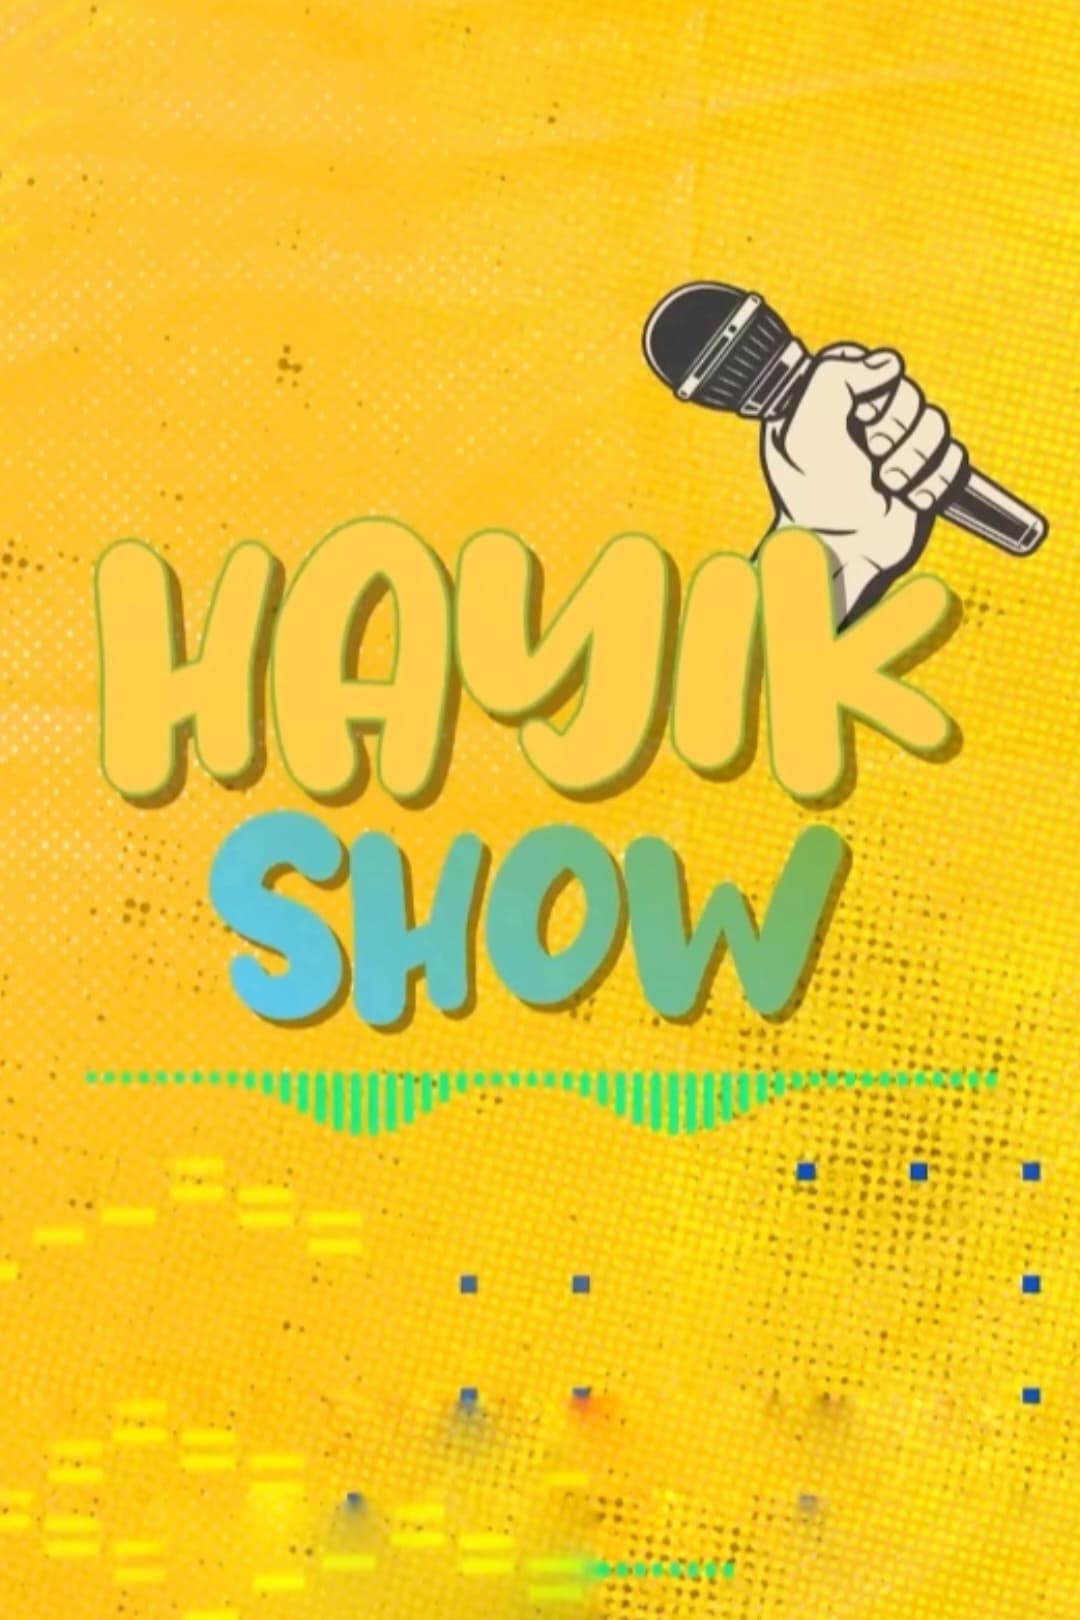 HAYIK Show